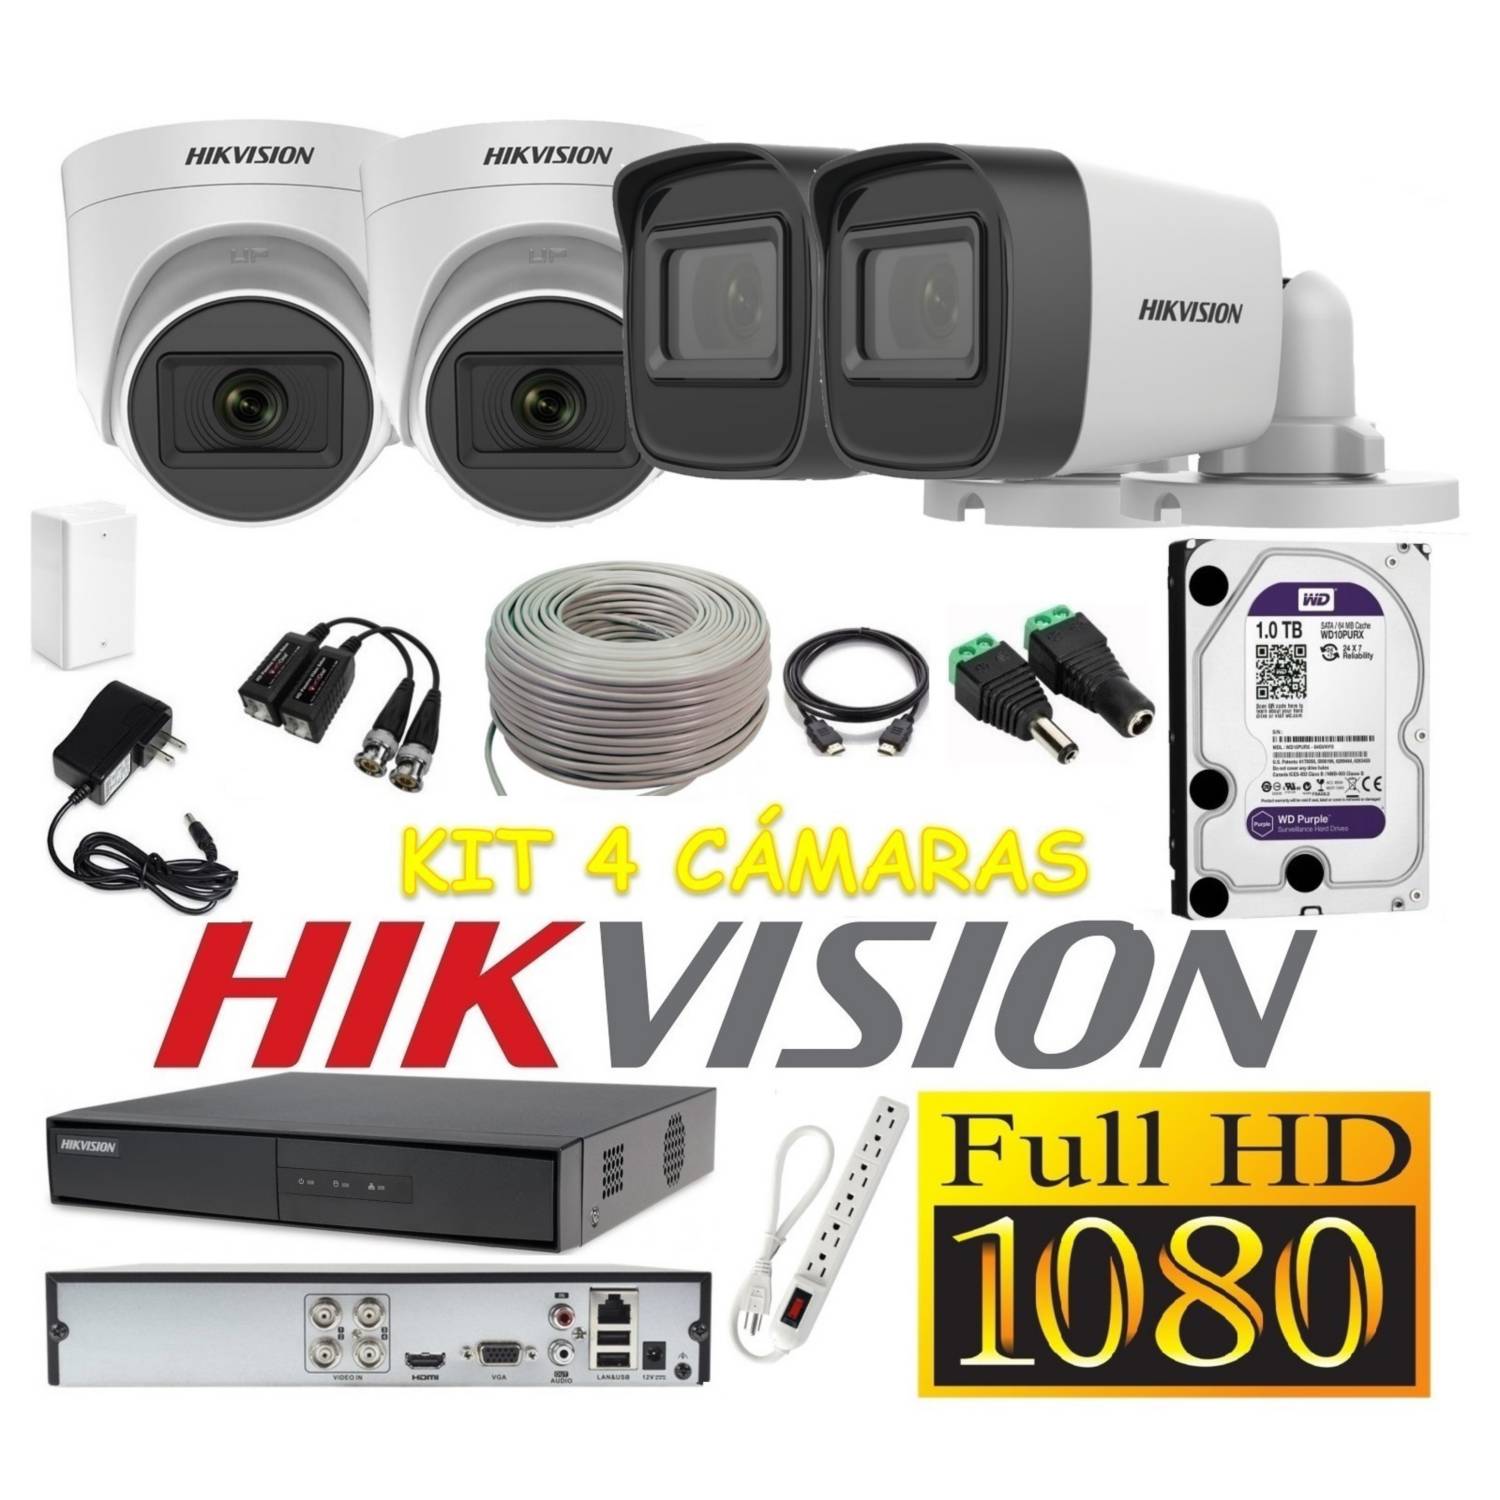 Kit Seguridad Hikvision 4 Camaras Vision Nocturna A Color !!